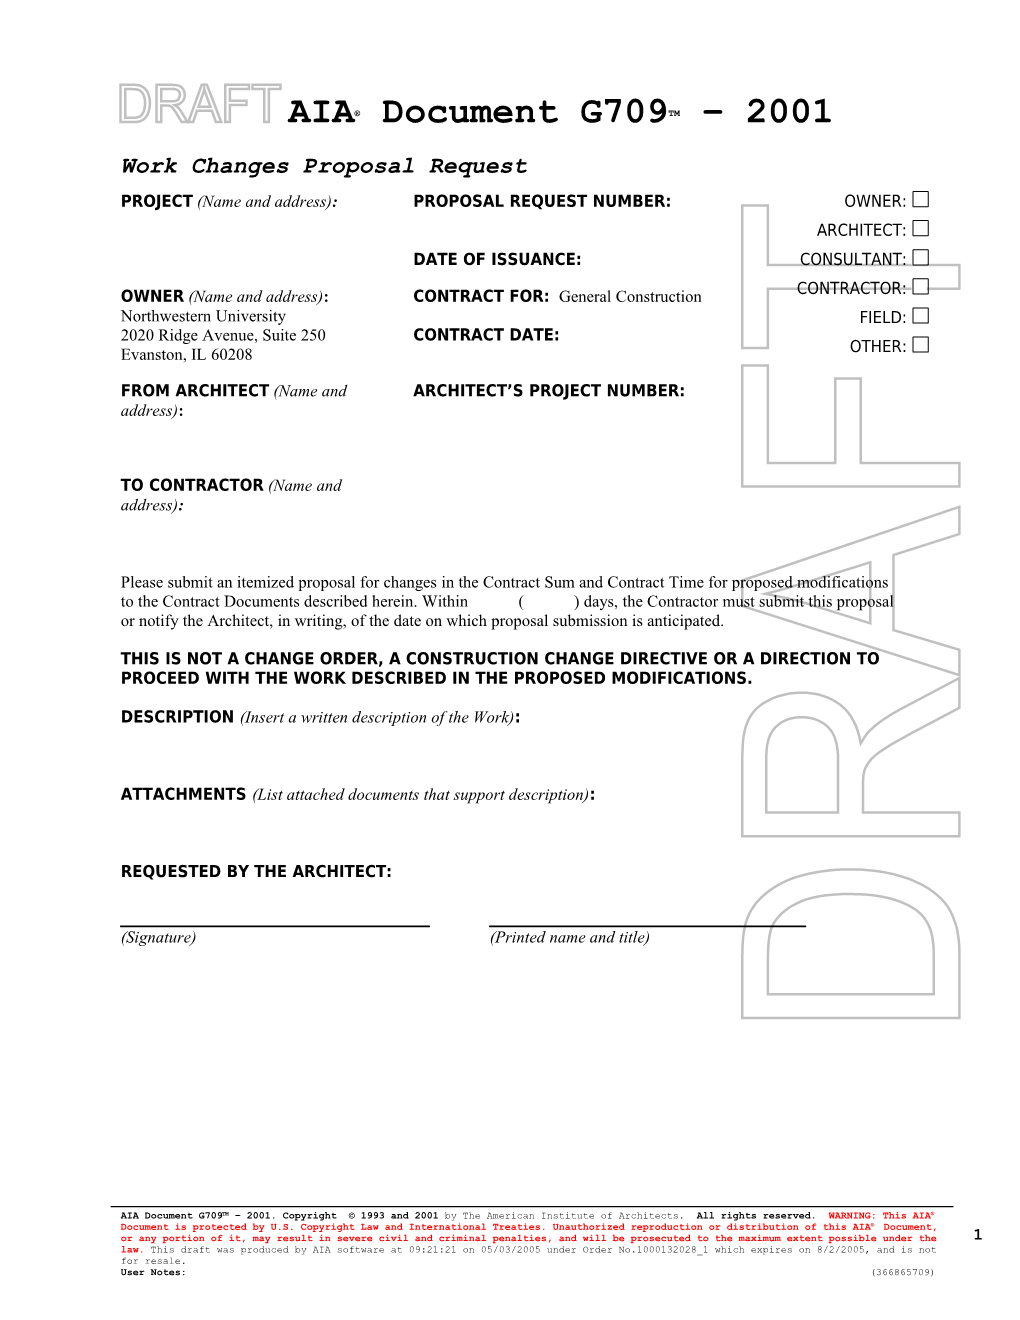 G709-2001 - Work Changes Proposal Request